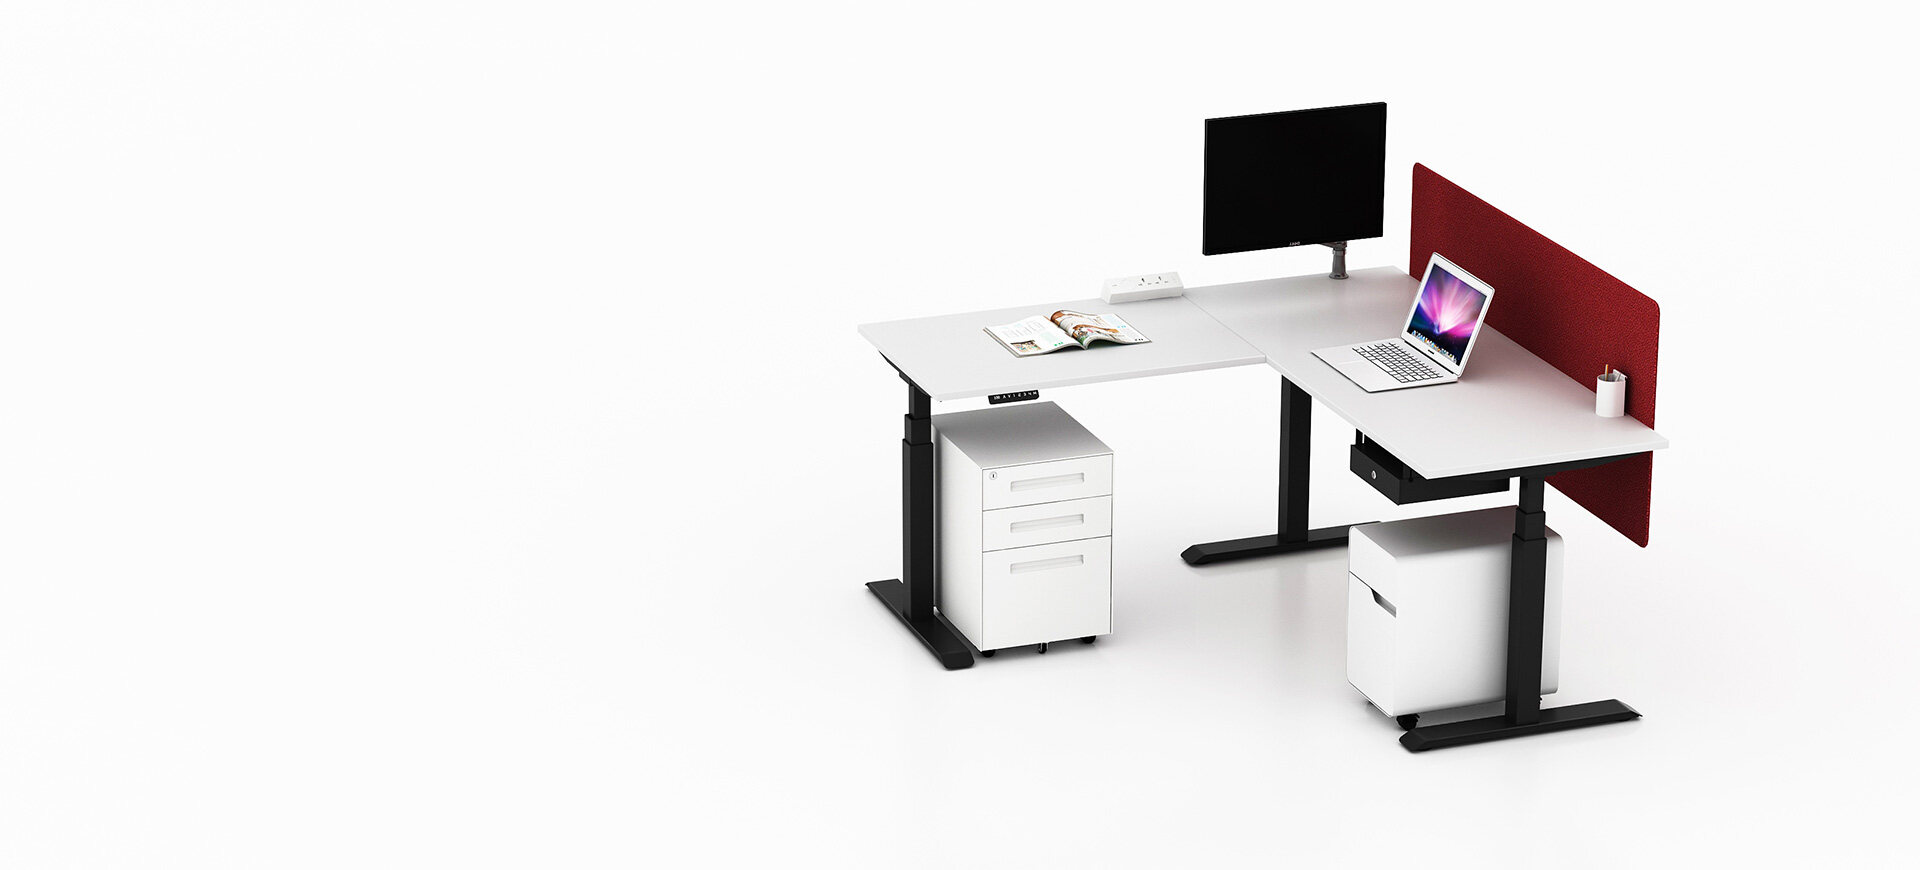 office desks,office computer desk,office standing desk